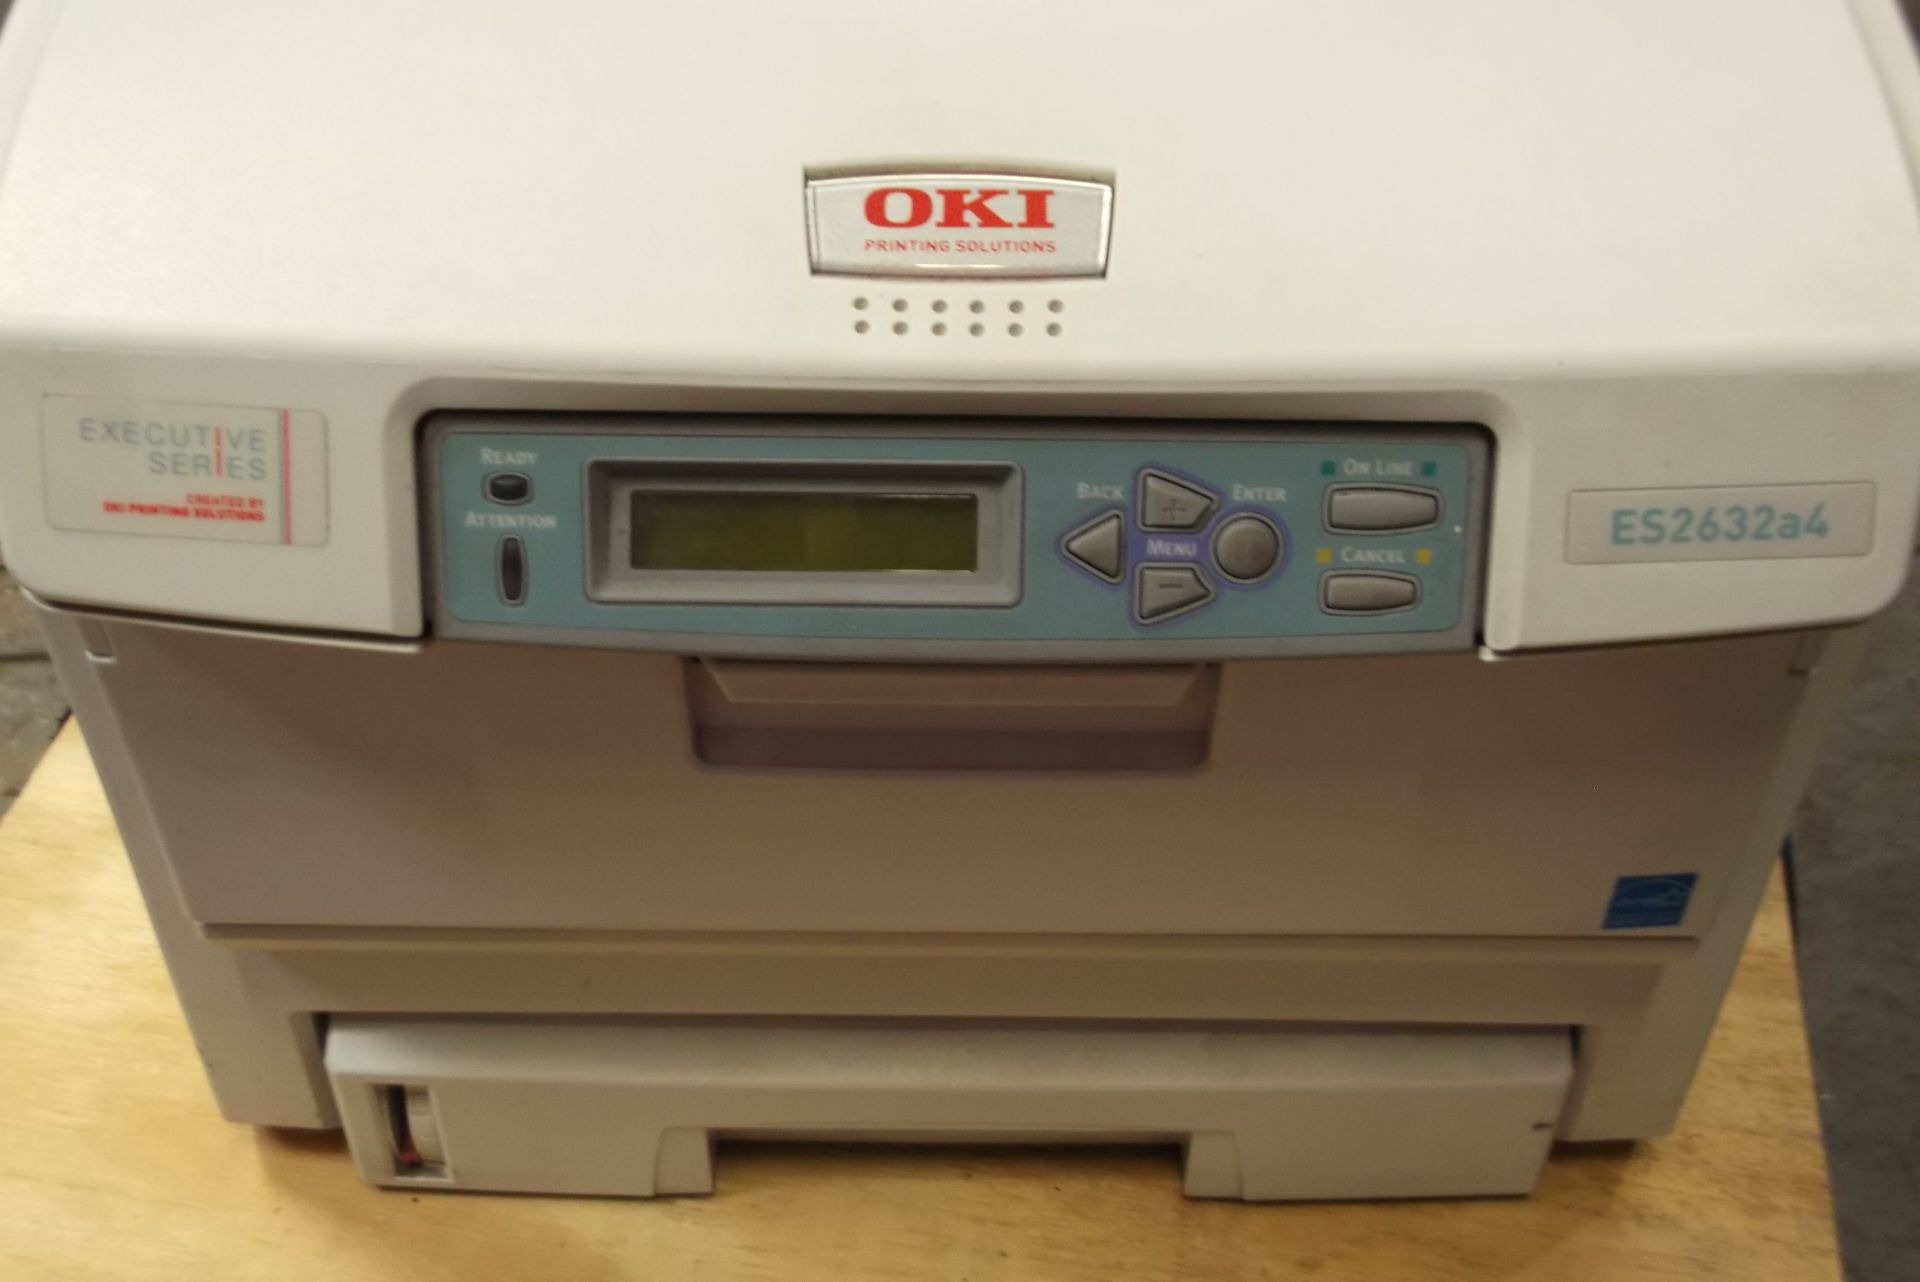 Oki ES2632A4 Printer Executive Series NO RESERVE - Image 2 of 3